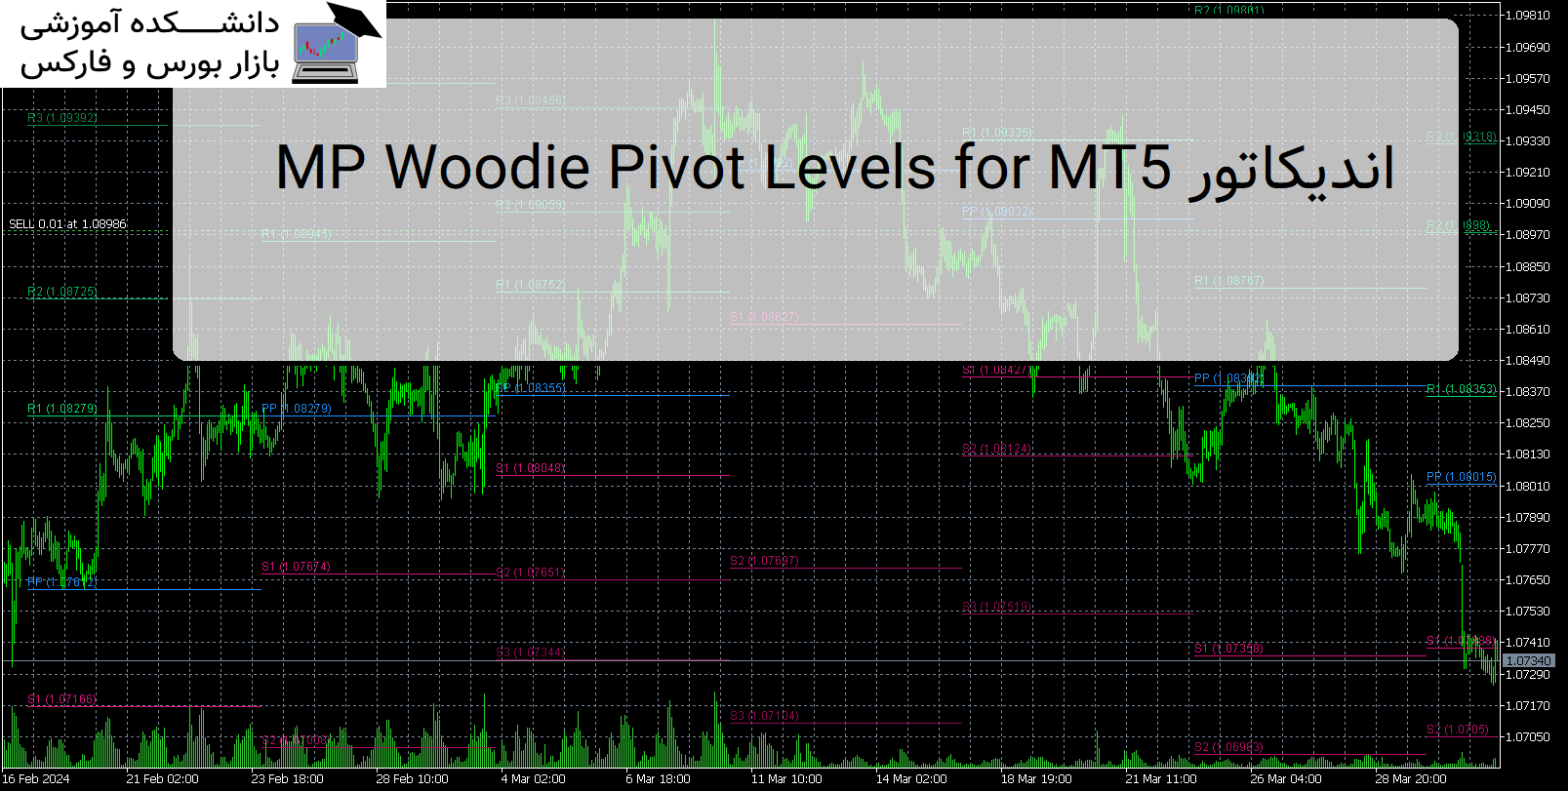 MP Woodie Pivot Levels for MT5 اندیکاتور